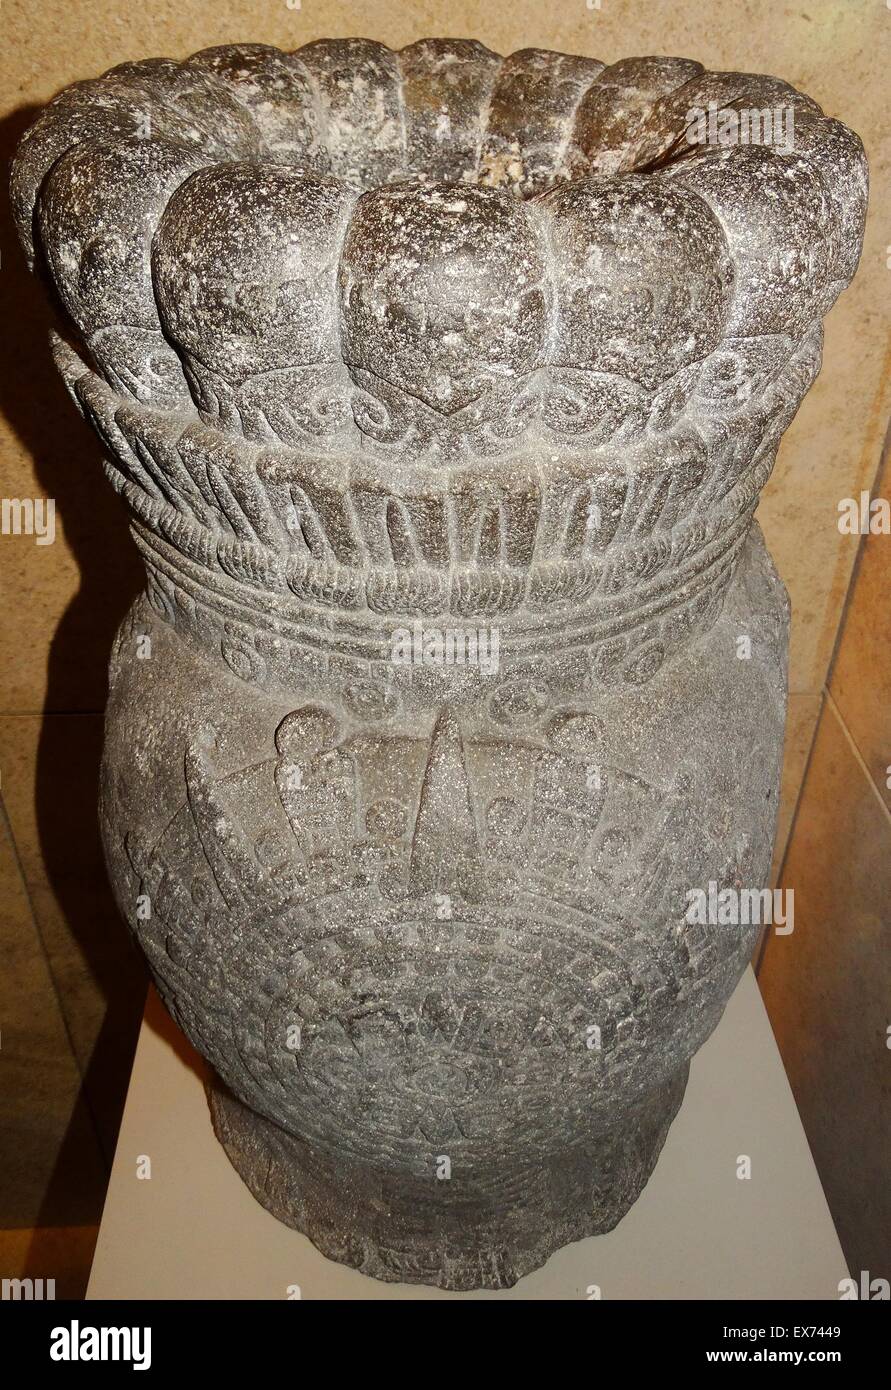 Stone offering vessel, Aztec, AD 1300-1521 Stock Photo